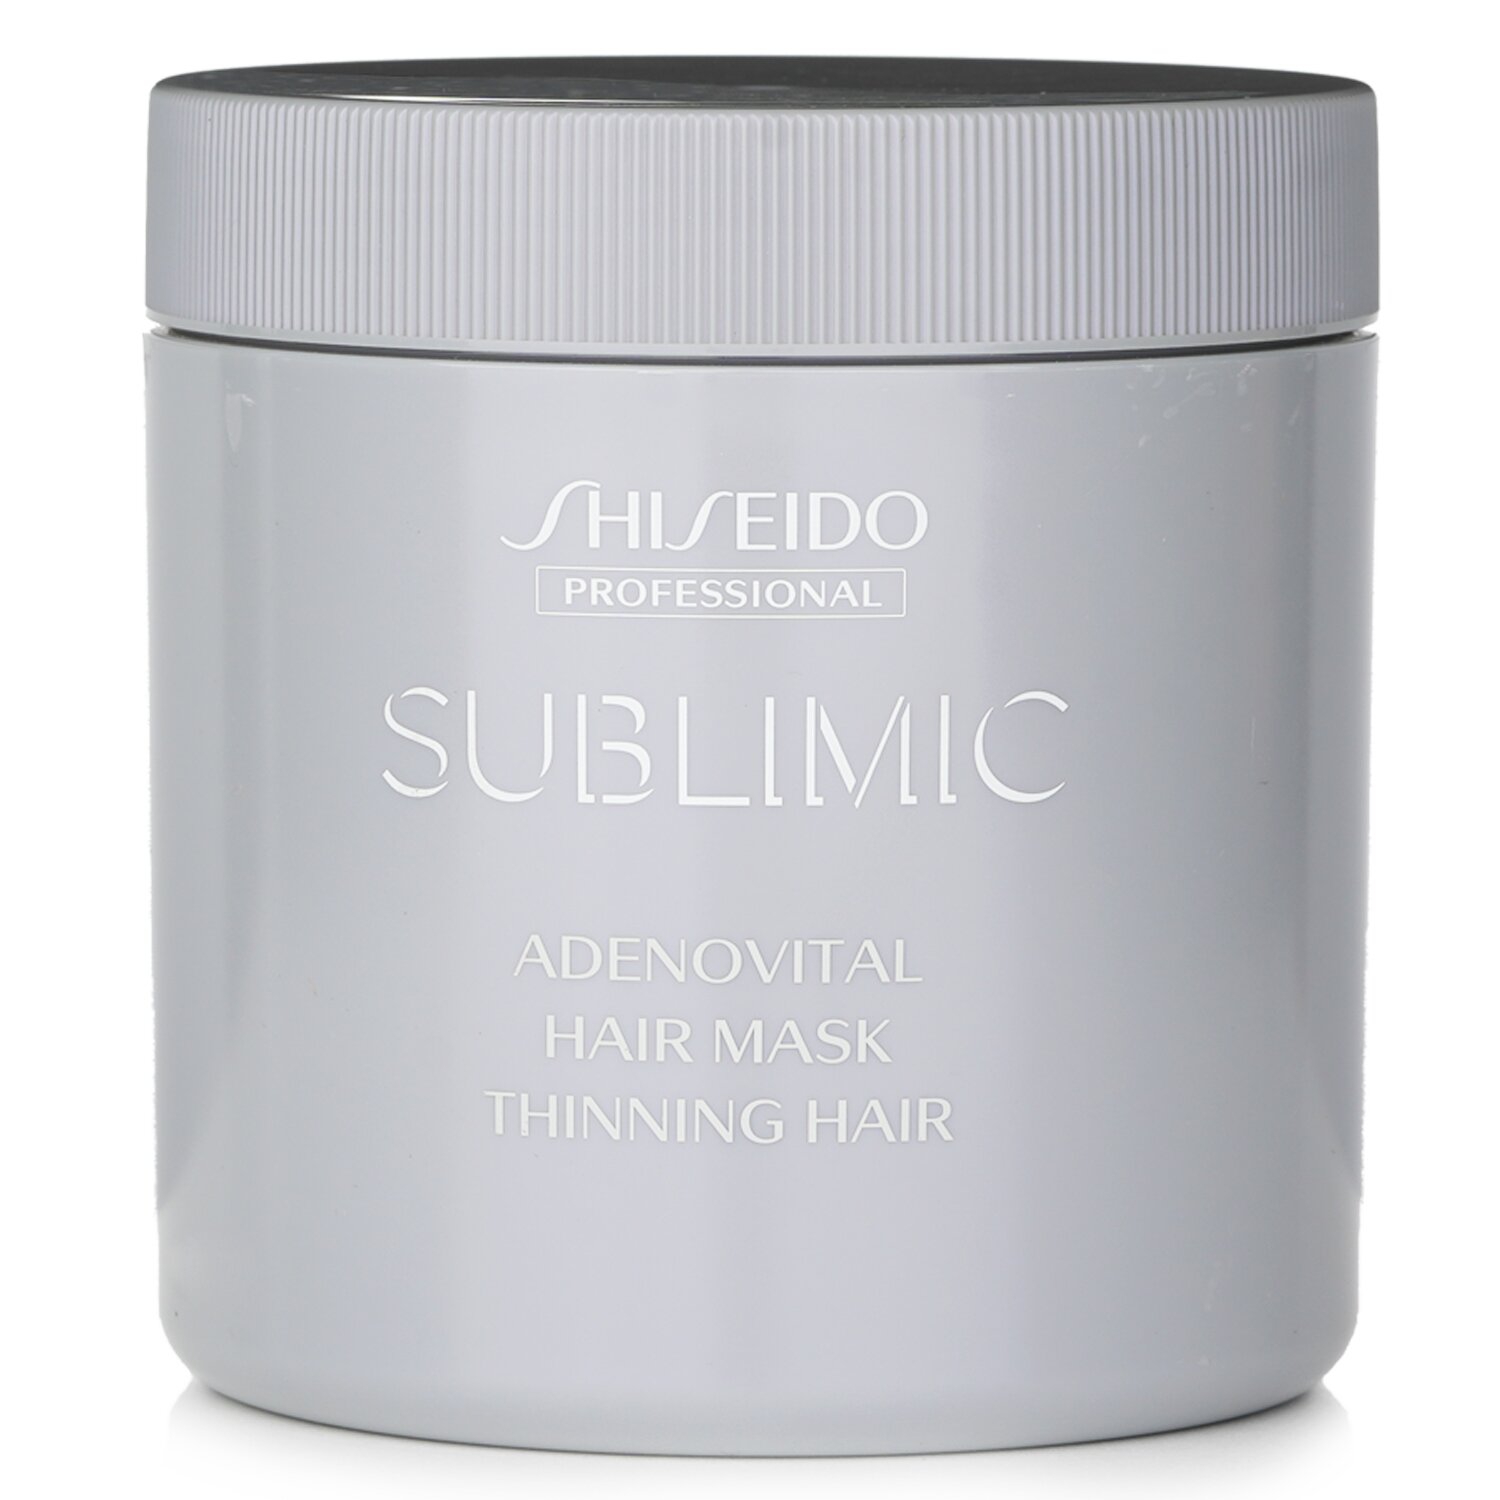 資生堂 Shiseido - 極緻育髮賦活髮膜 (稀薄髮質)